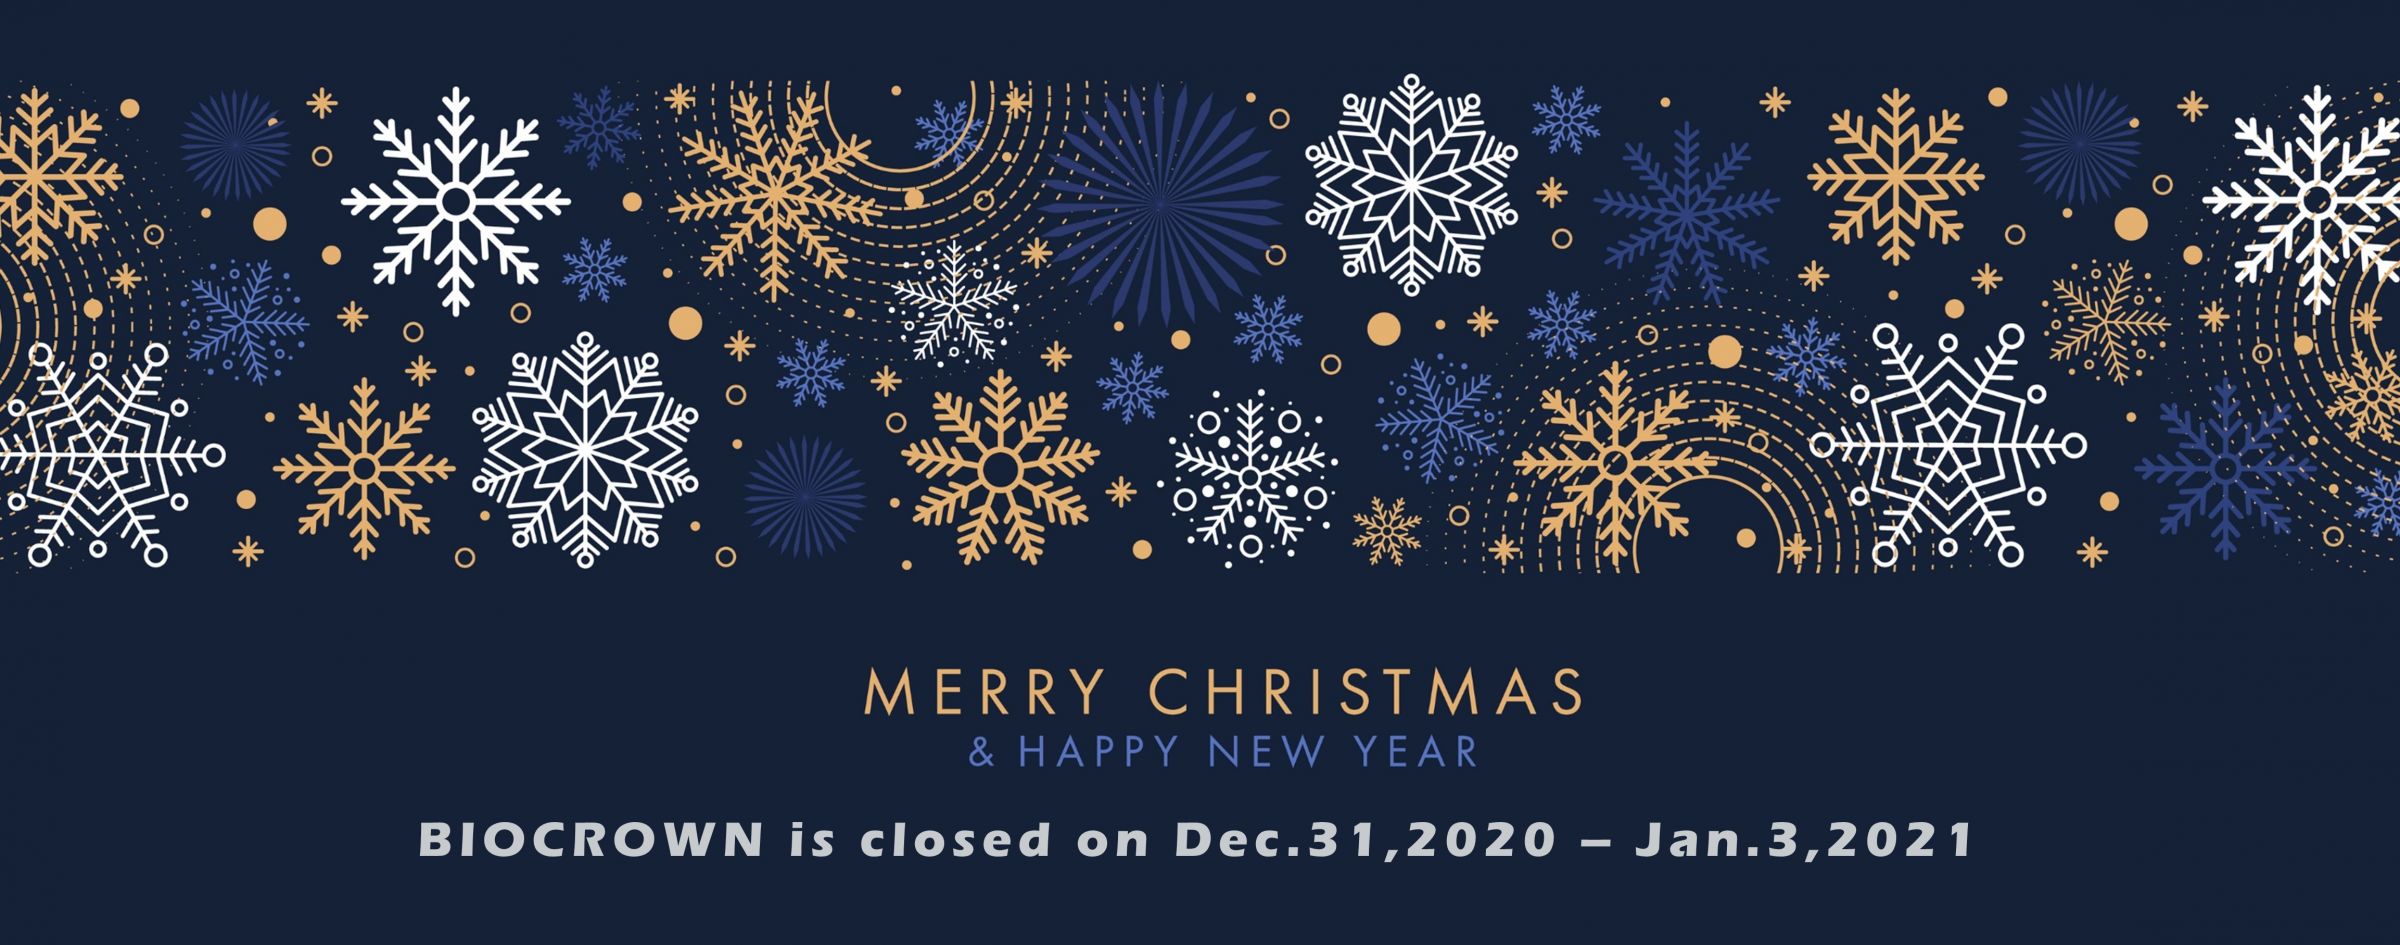 Holiday Notice: Biocrown Closure on Dec 31,2020 - Jan 3,2021